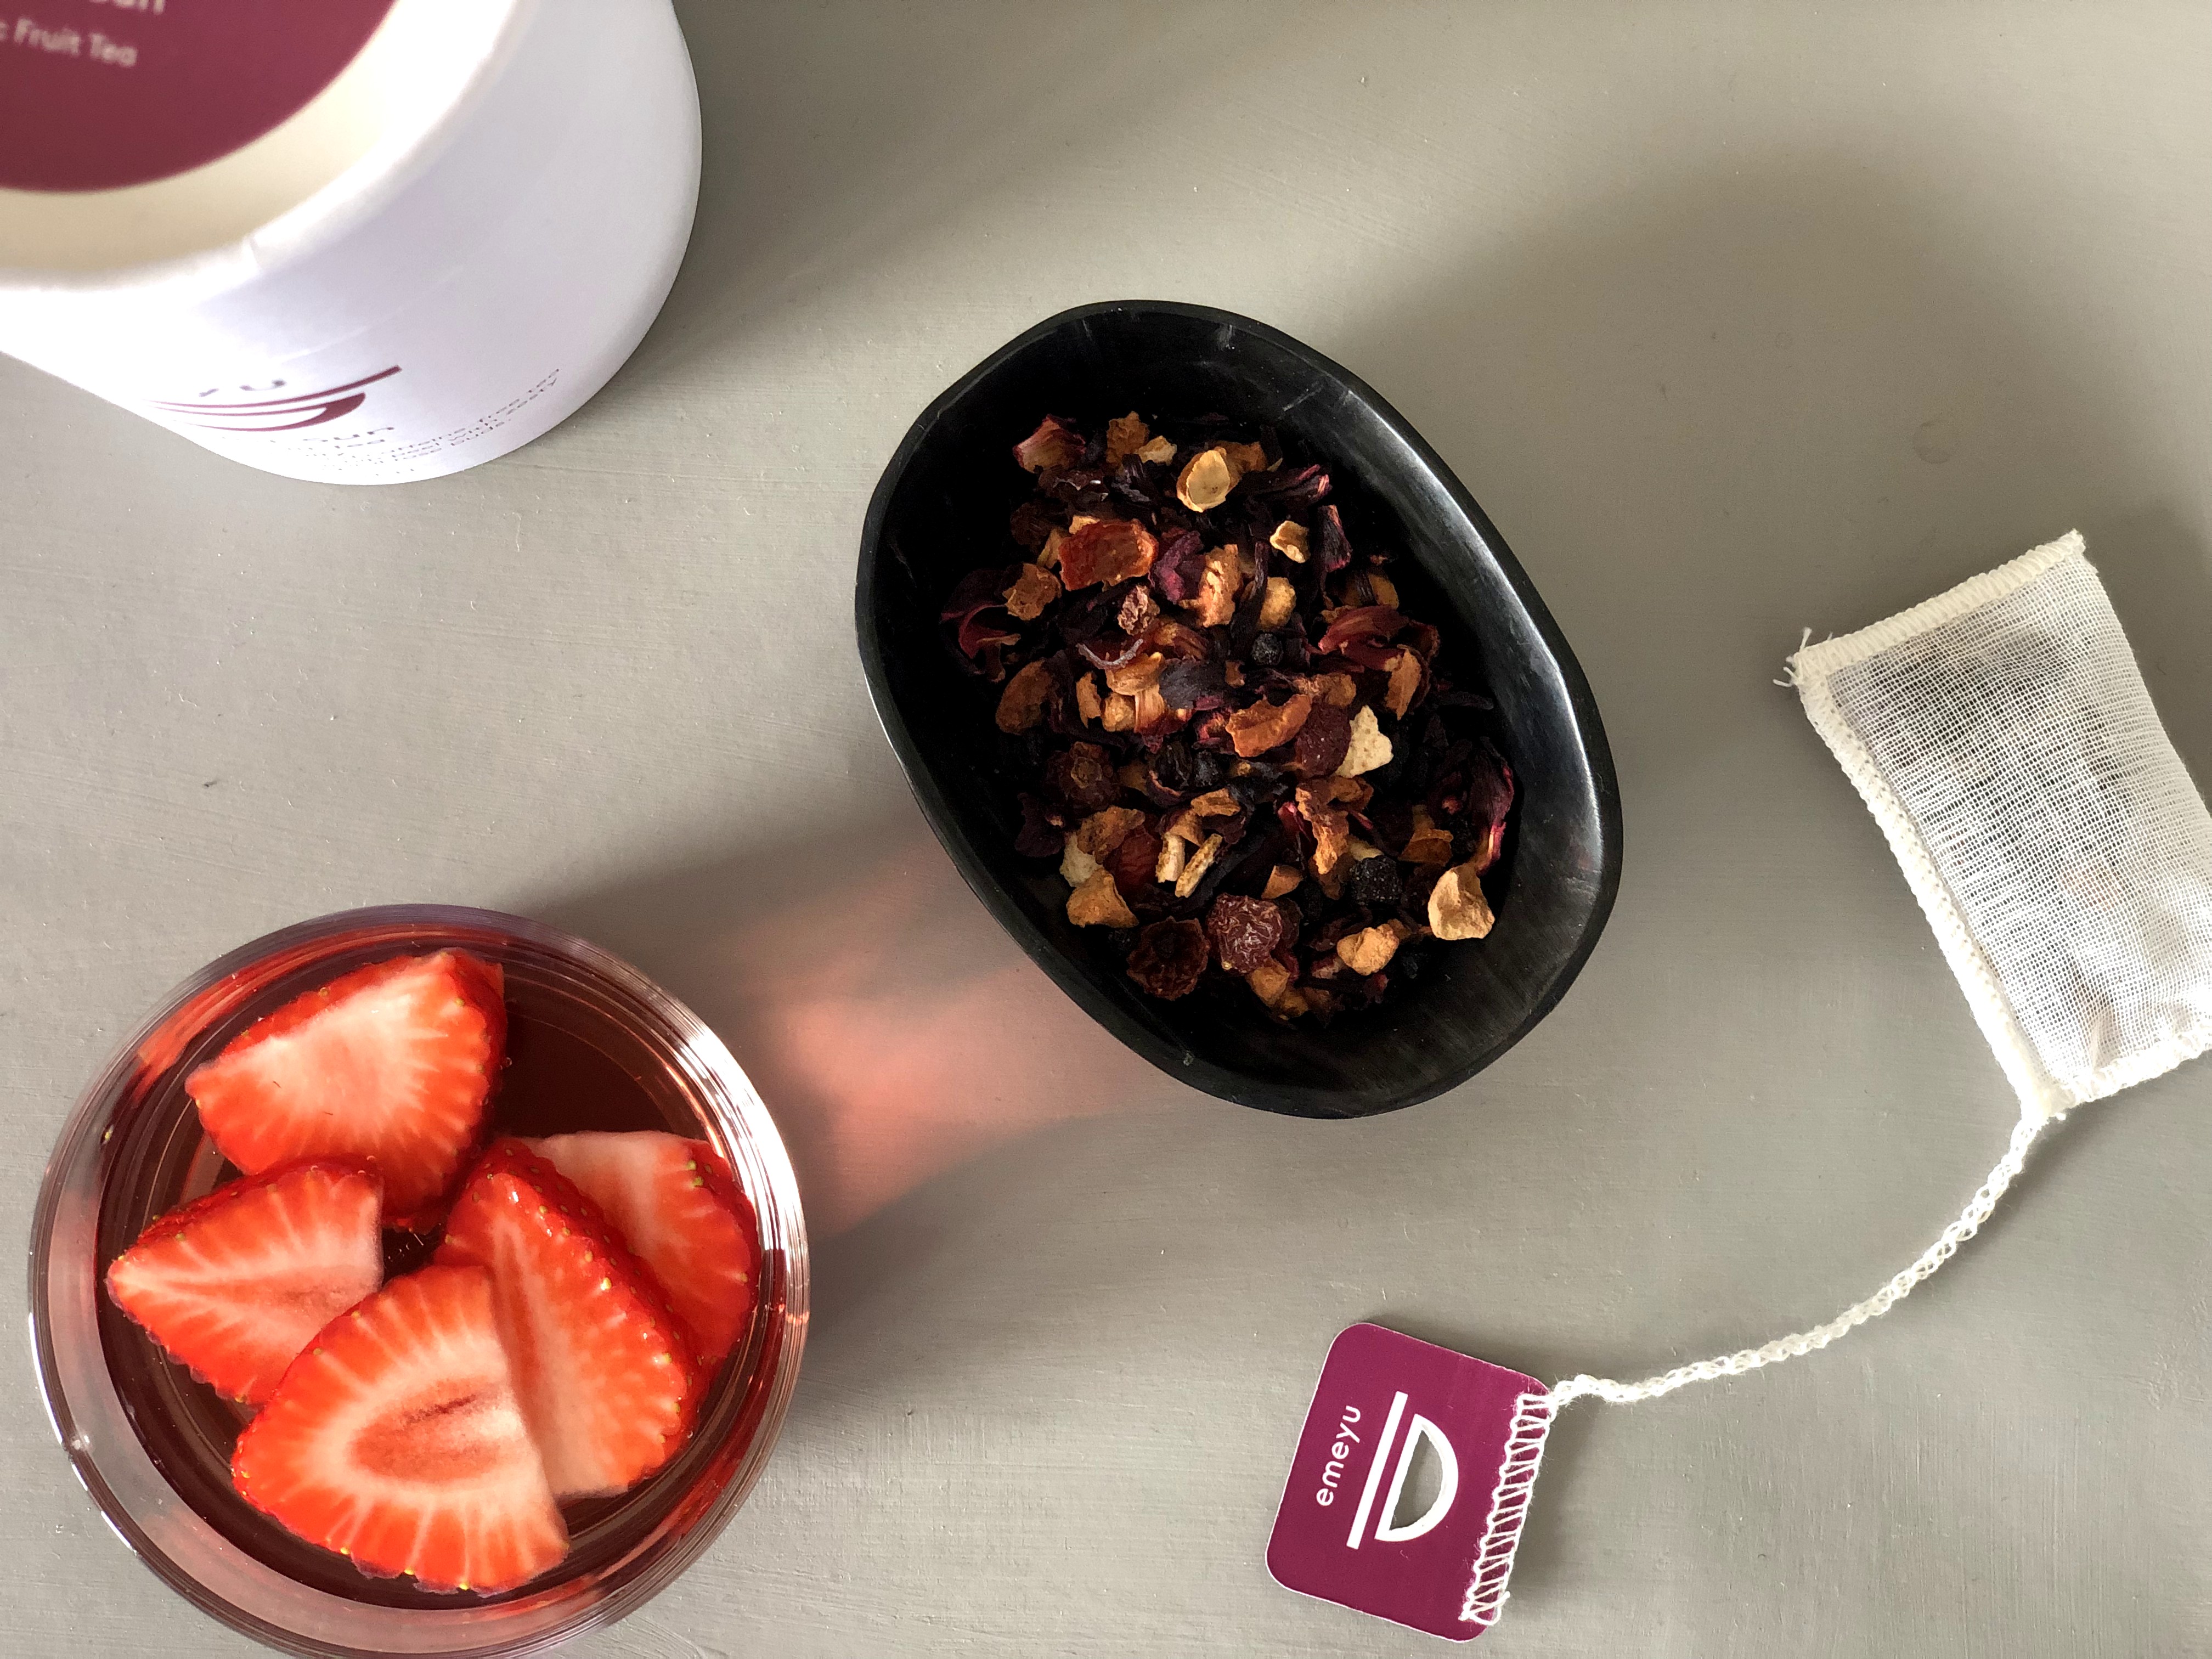 Vores te, Midnight Sun som løs te i skål, som bomuldpose og som iste med friske jordbær.